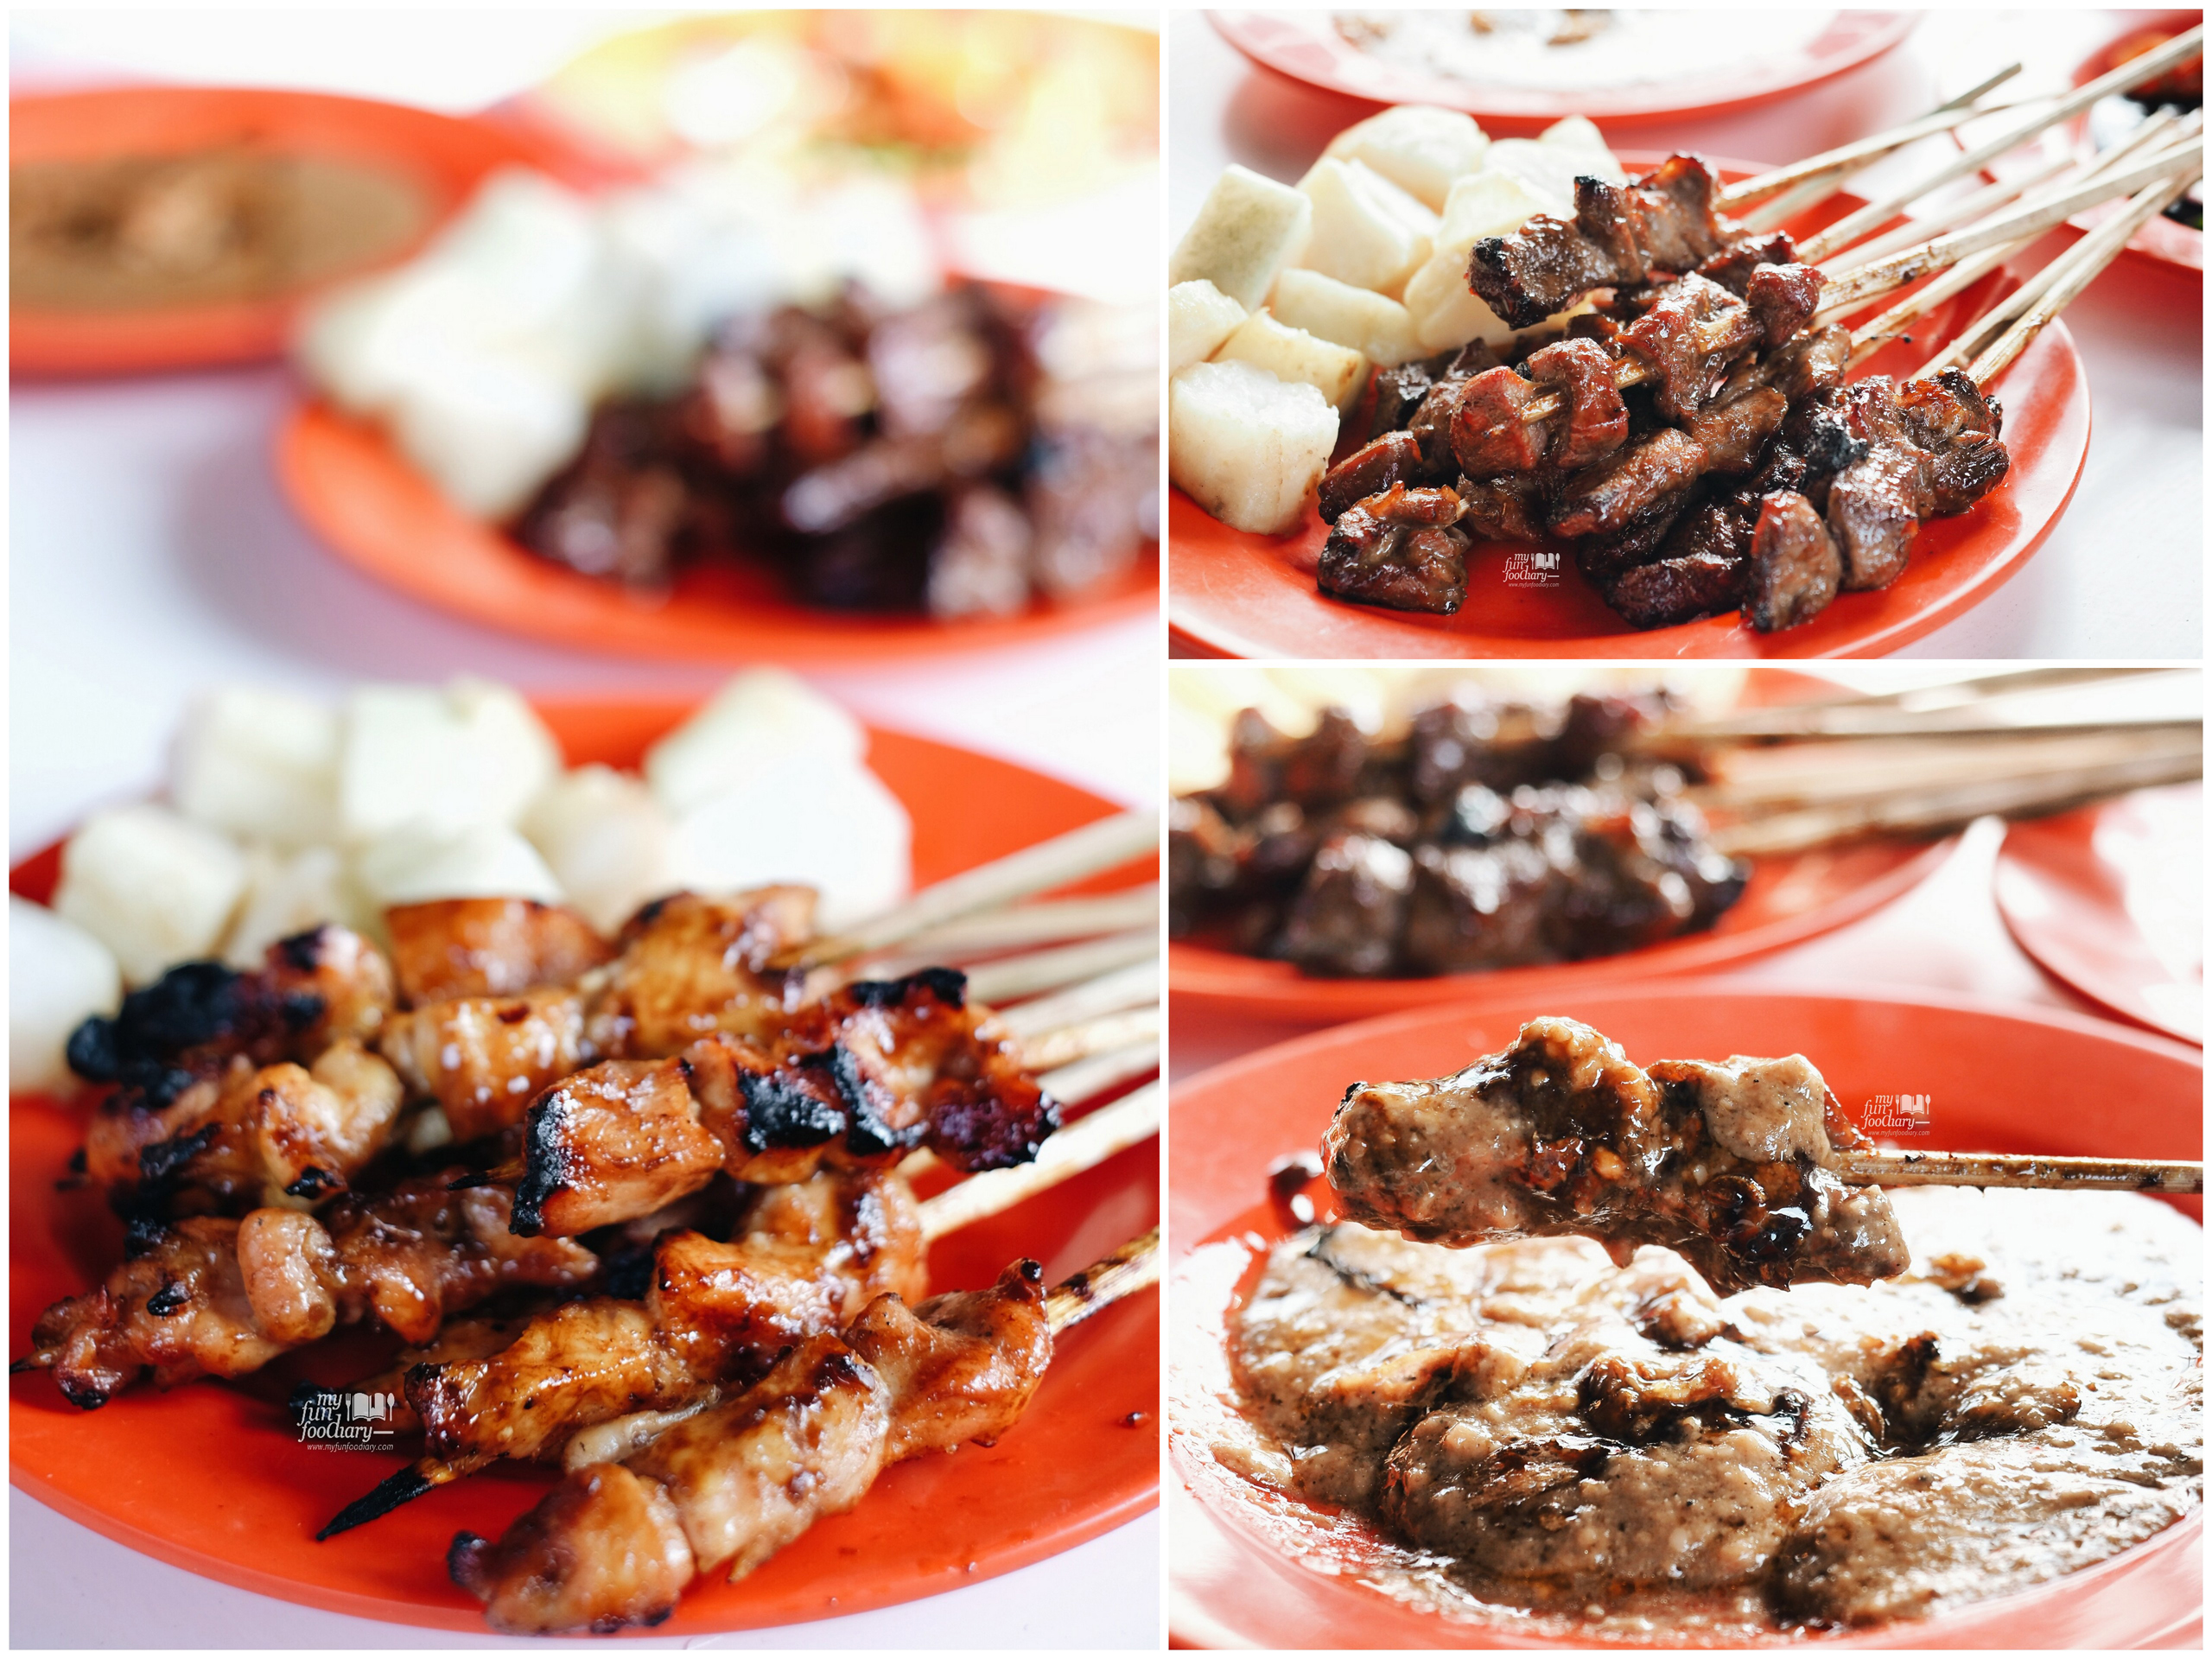 Sate Ayam dan Sate Kambing Daging at Warung Sate Shinta by Myfunfoodiary